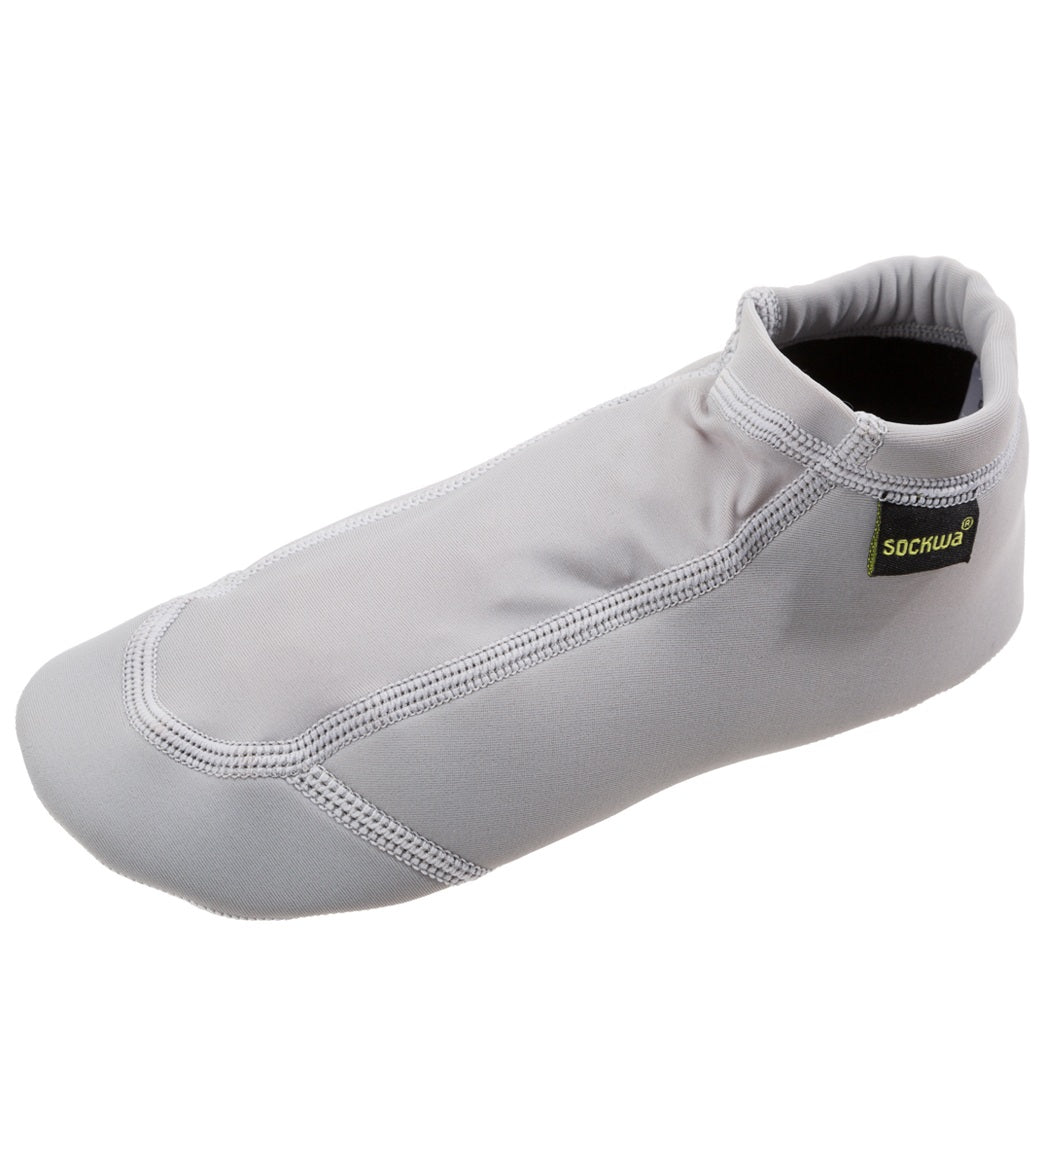 Sockwa Water Shoes Playa Lo Aqua Socks - Grey W6/M5 Neoprene/Nylon - Swimoutlet.com